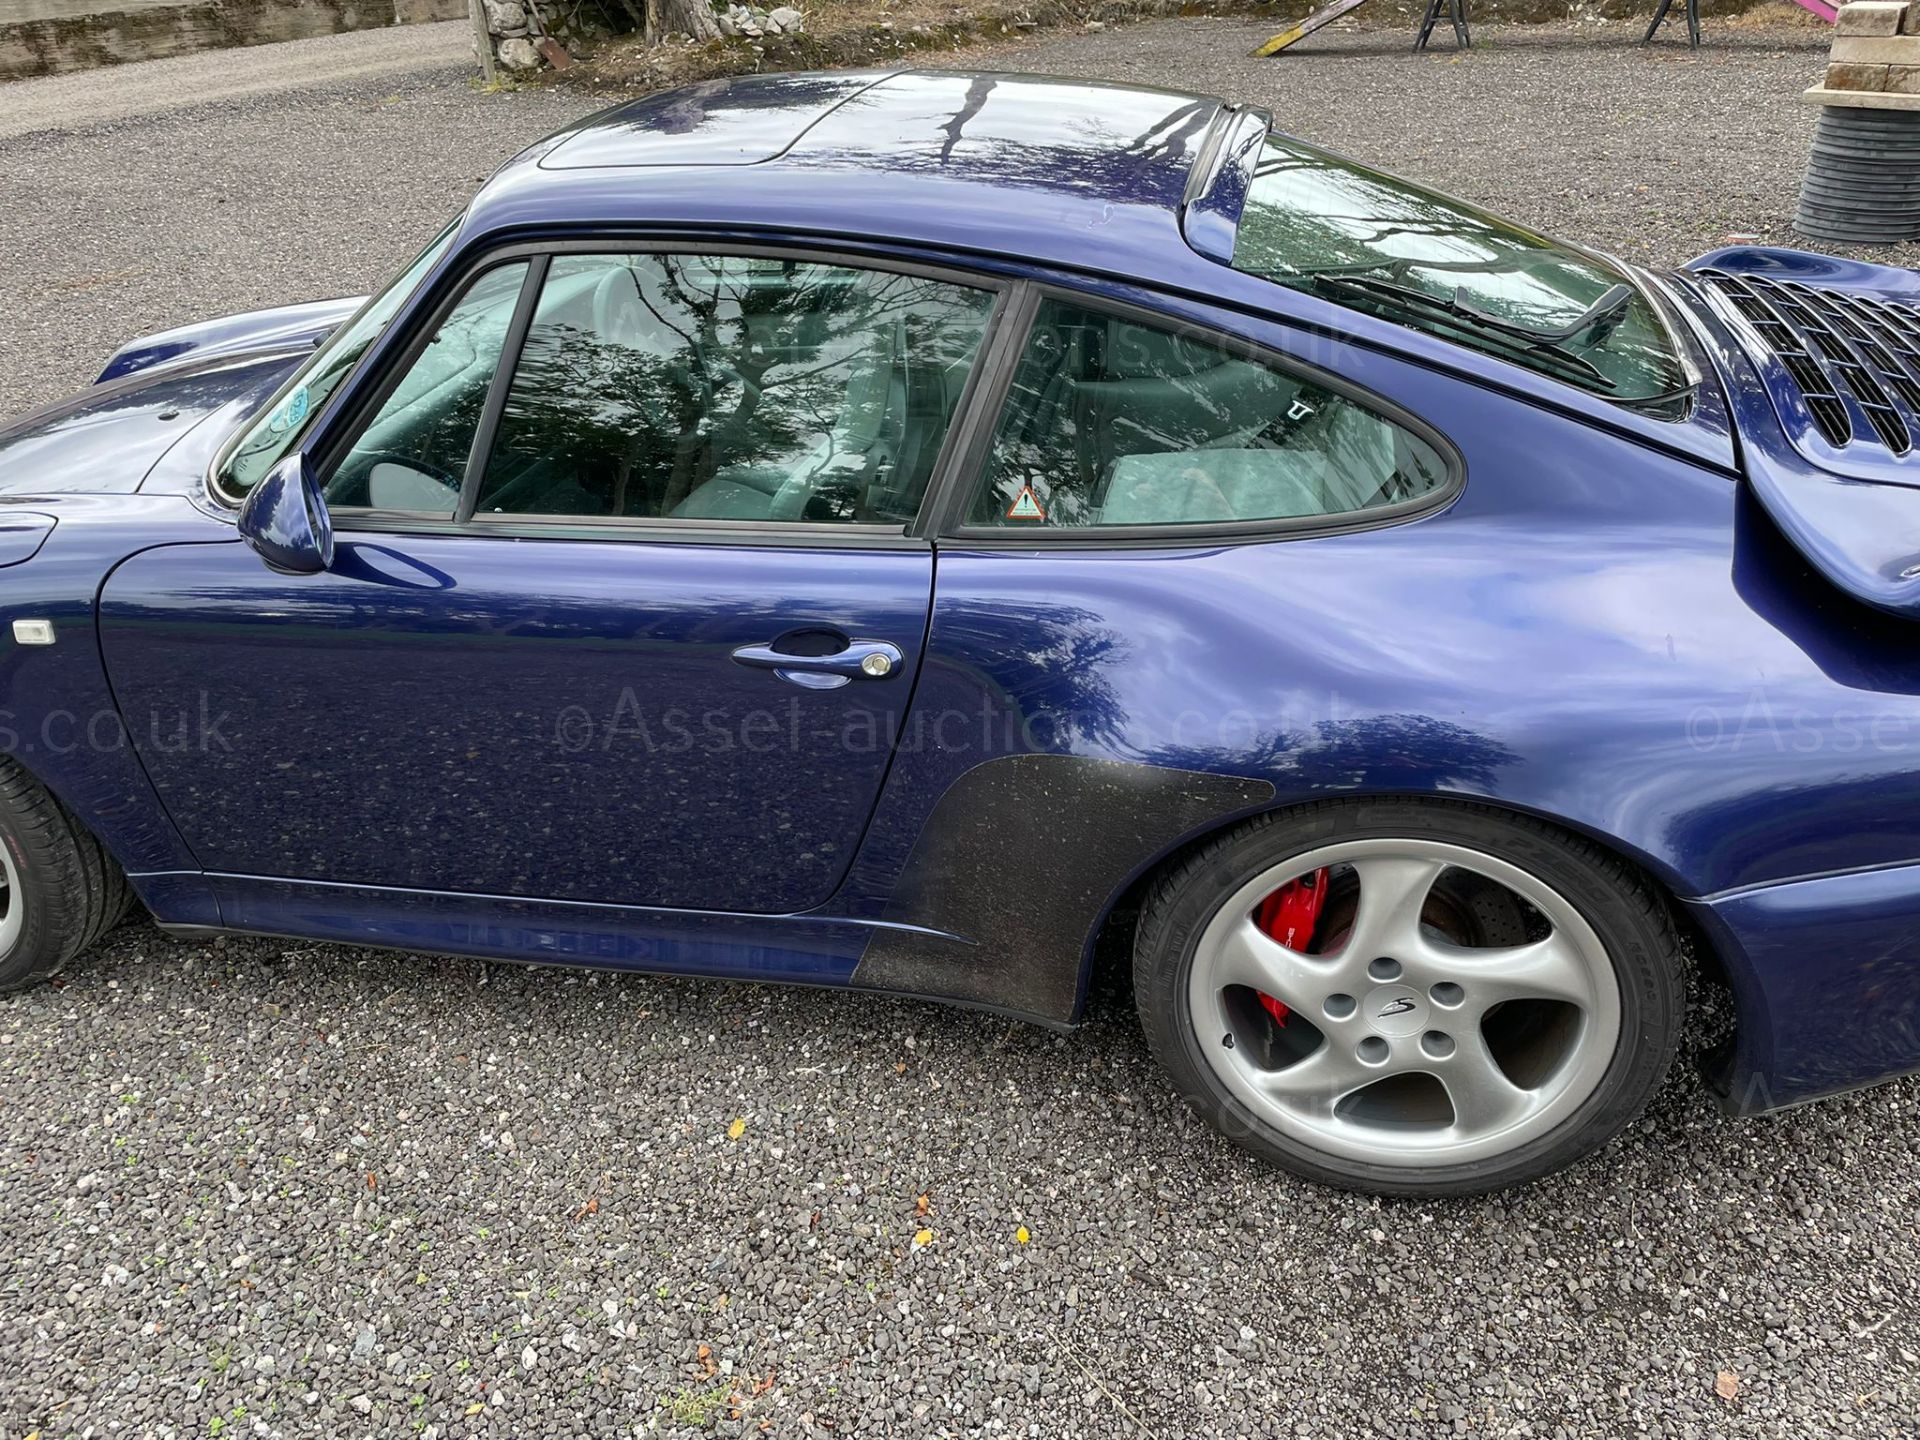 1996 PORSCHE 911 CARRERA 4 S BLUE SALOON, 141K MILES, 3600cc PETROL ENGINE *PLUS VAT* - Image 3 of 12